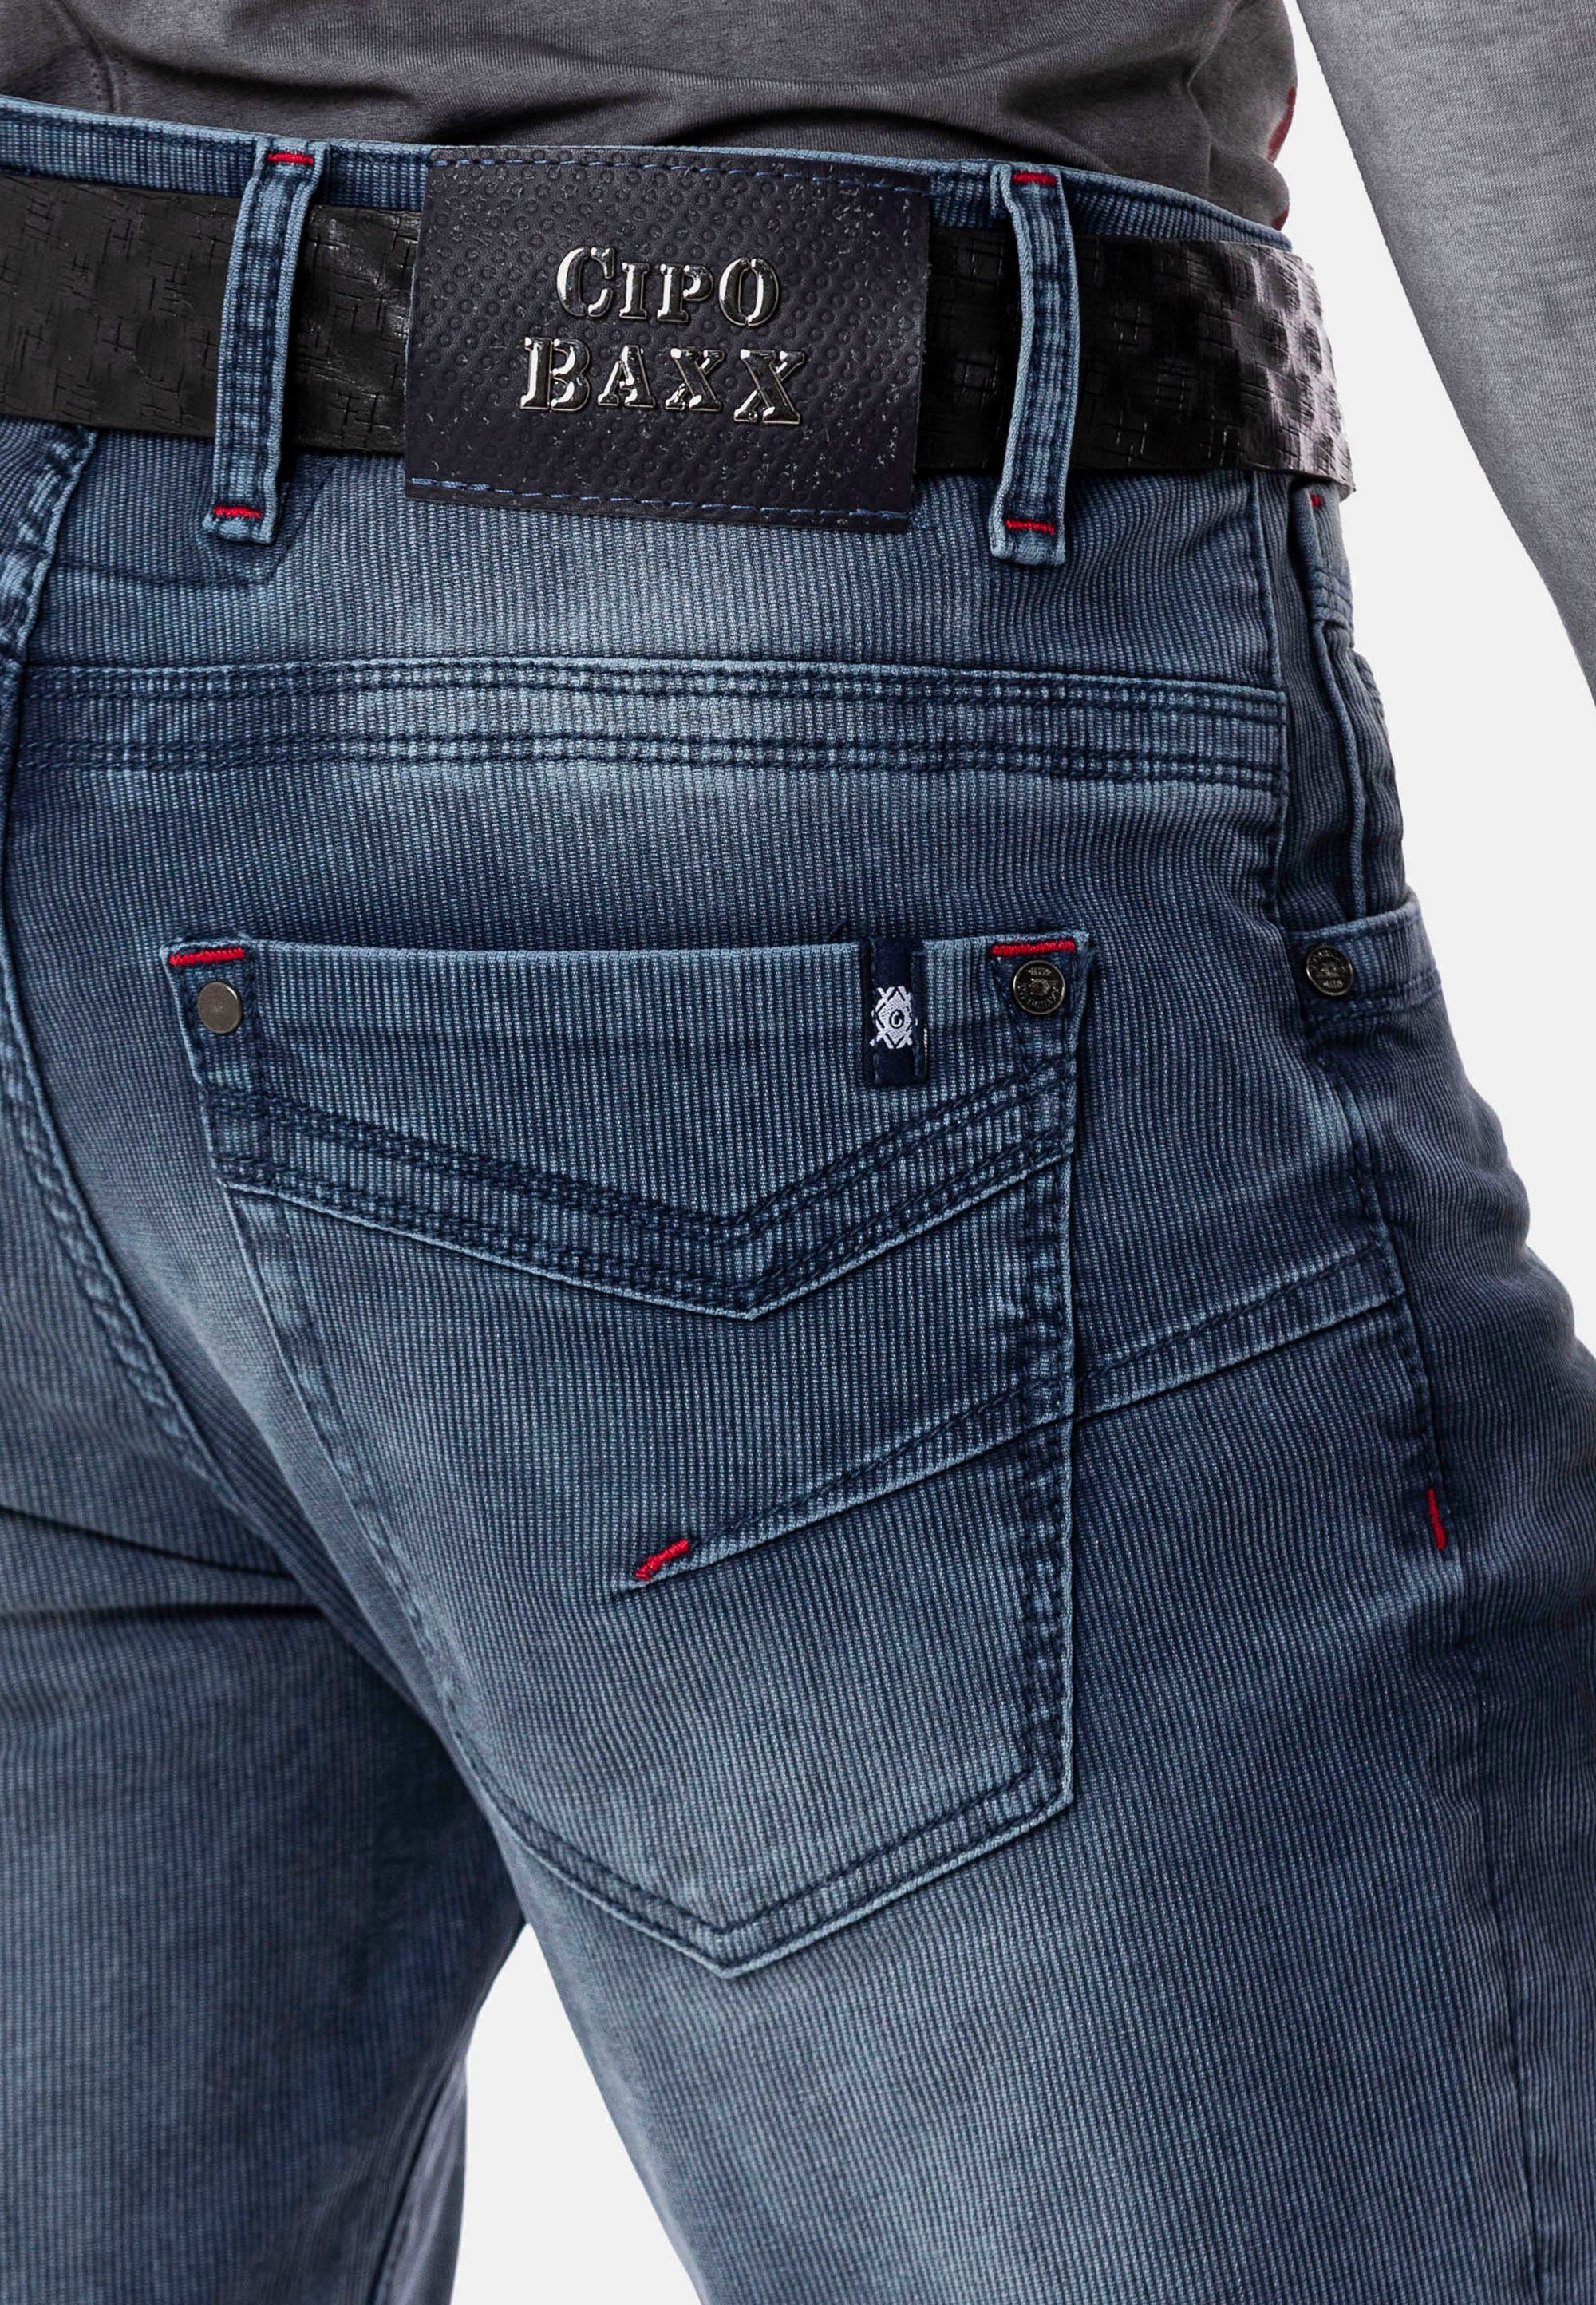 Cipo & Baxx Straight-Jeans in stilvollem blau Cord-Design